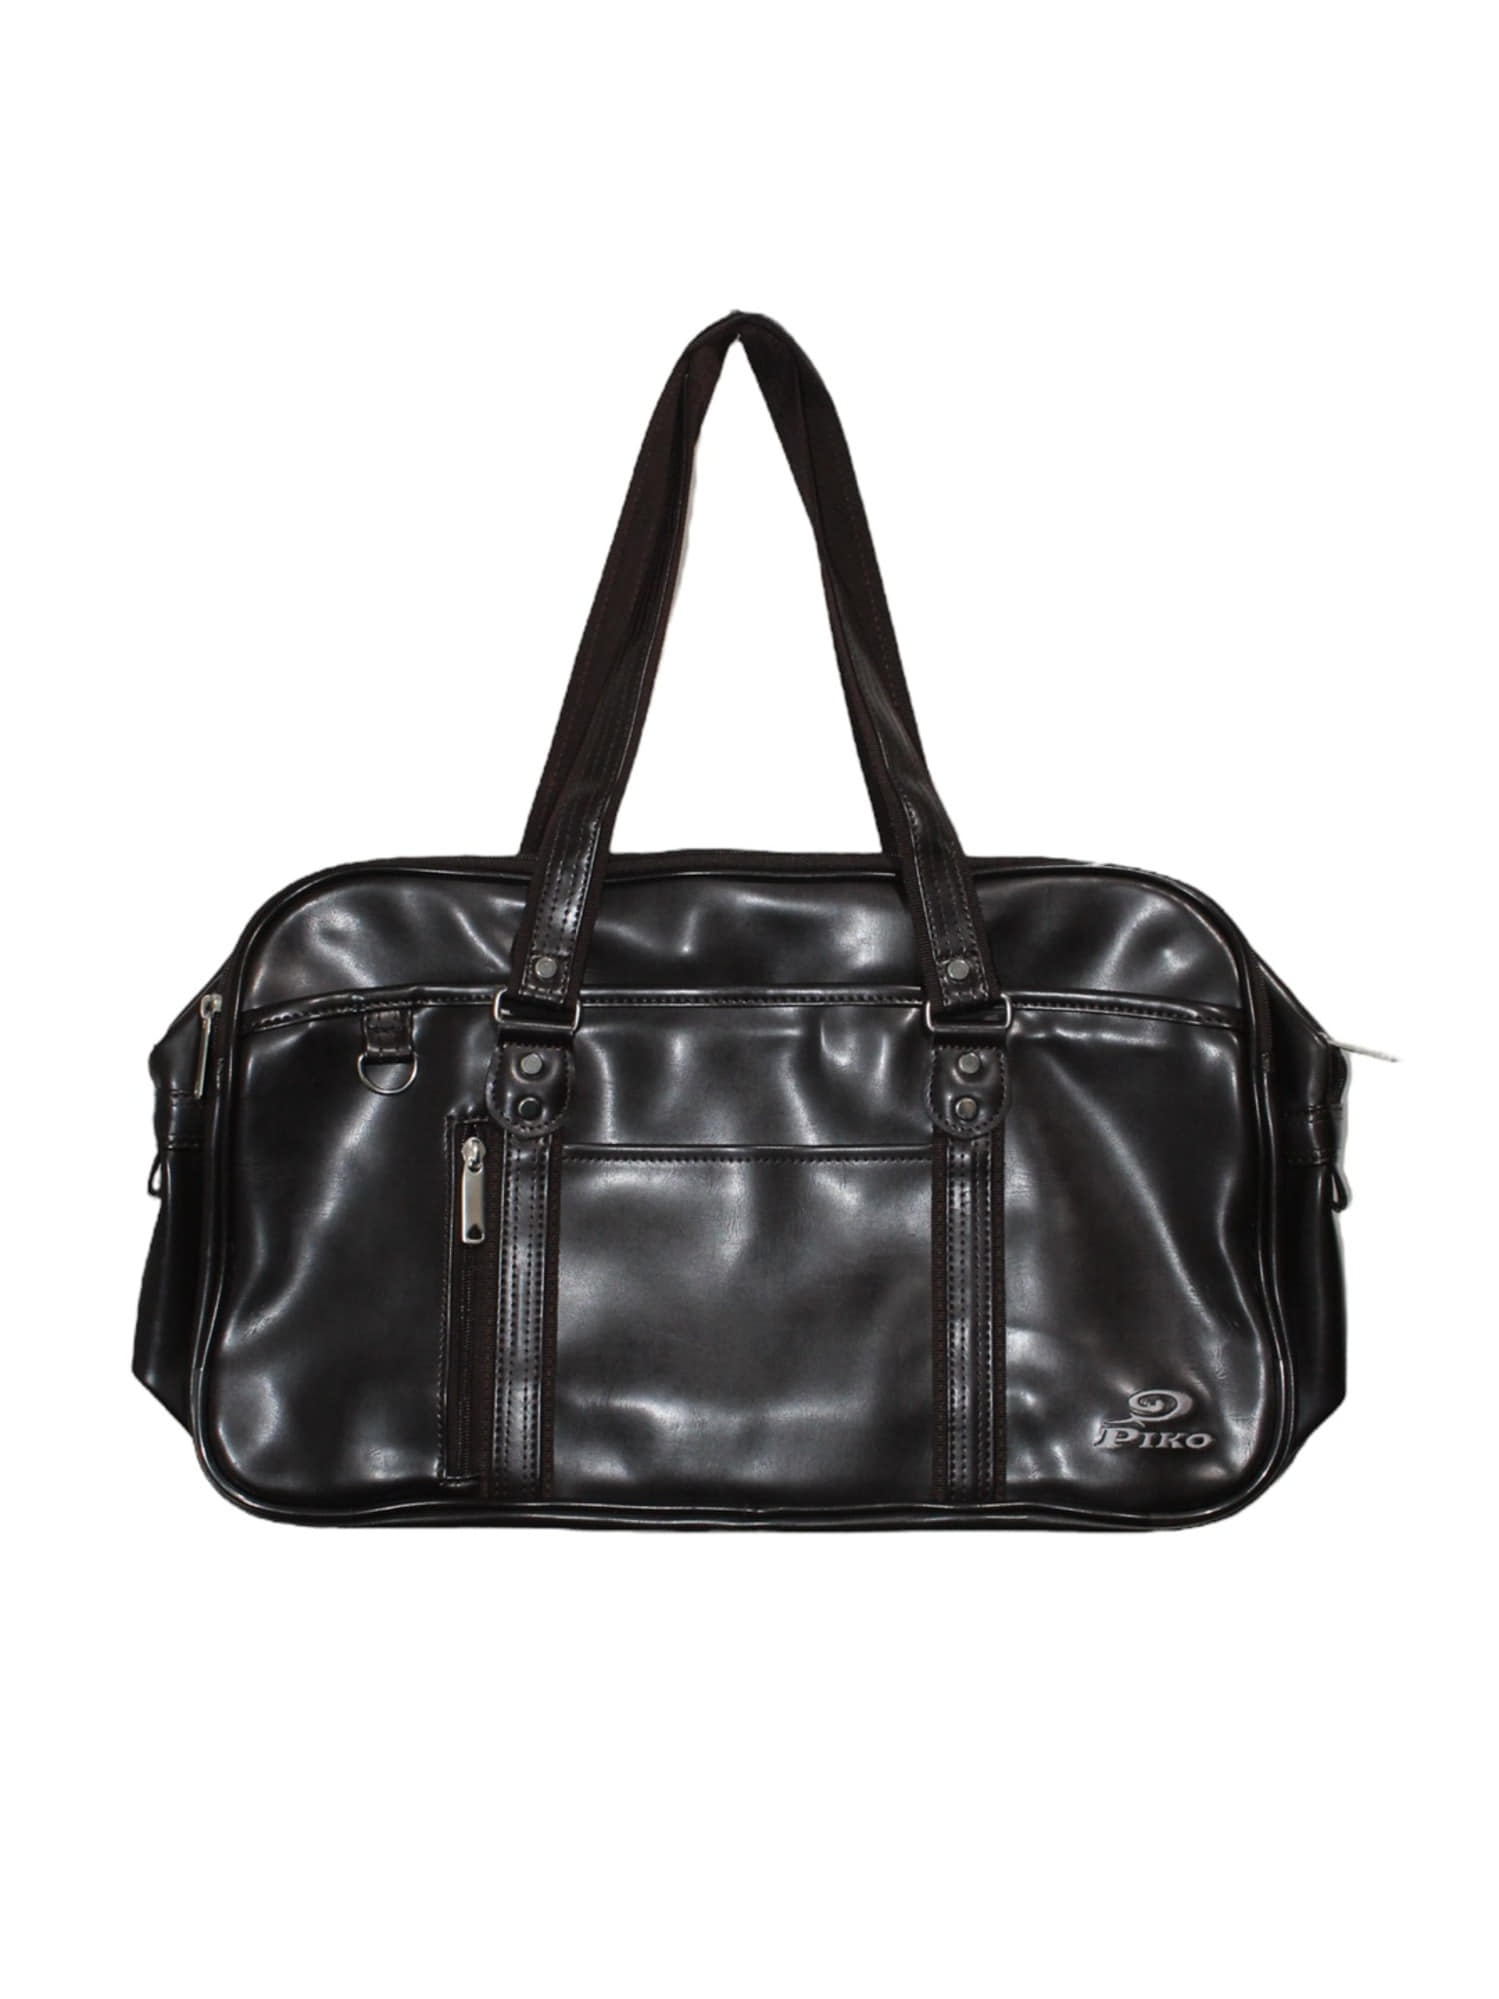 PIKO Brown Leather Tote Bag